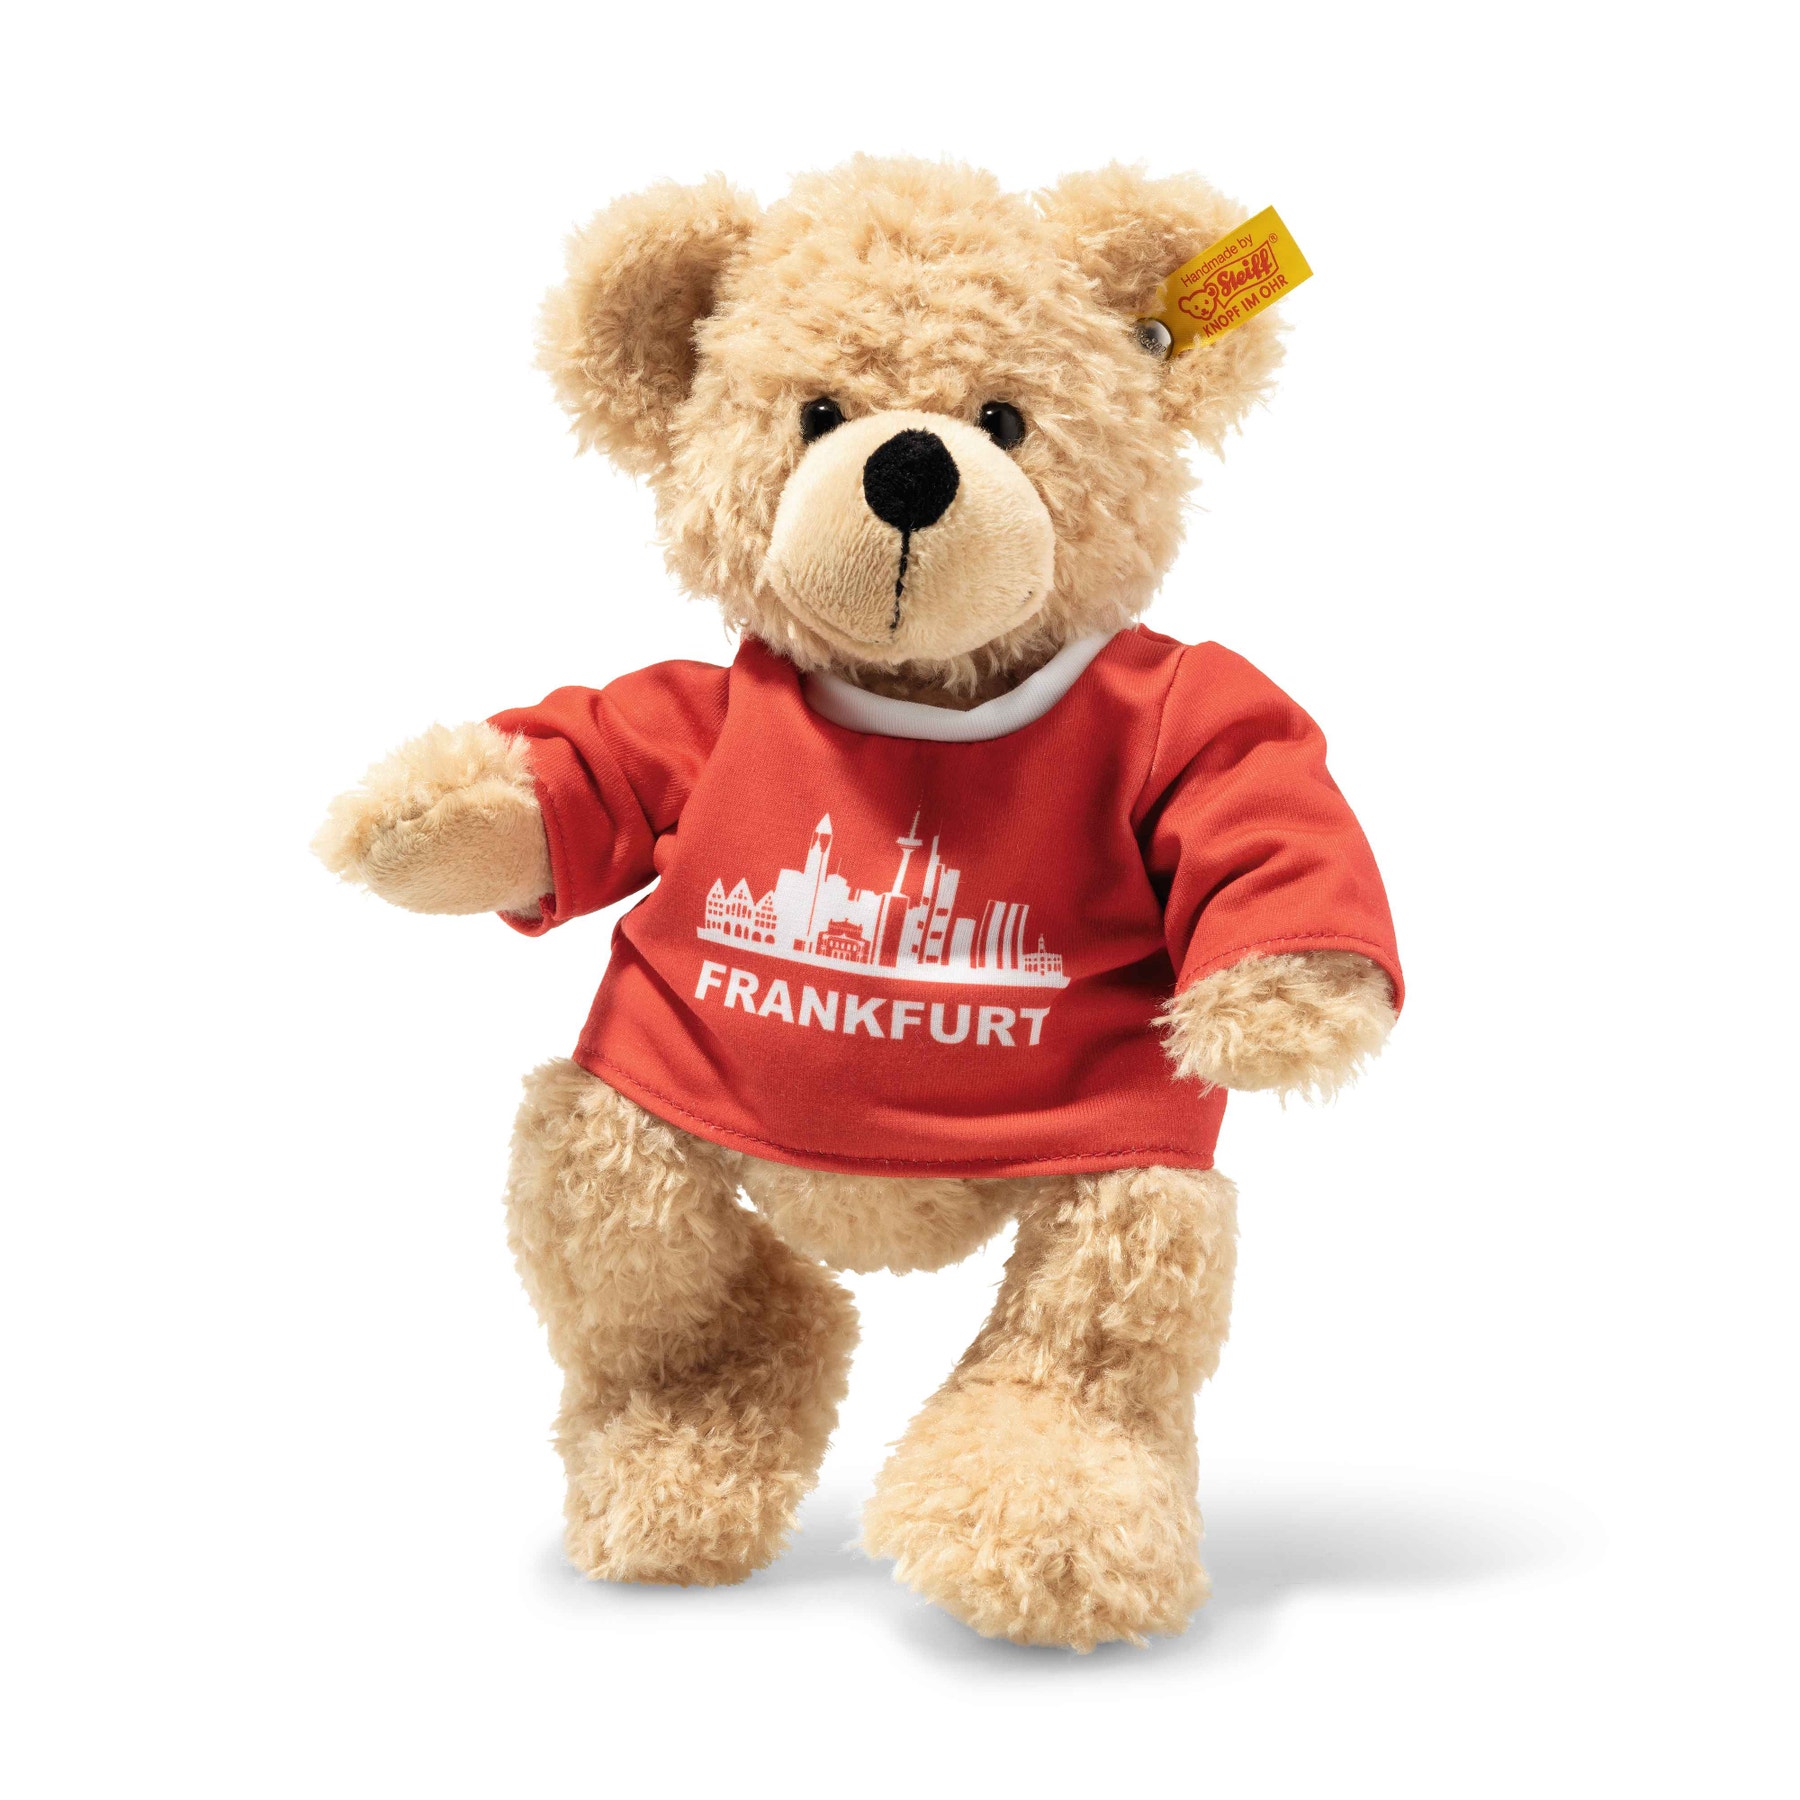 Frankfurt Teddy bear